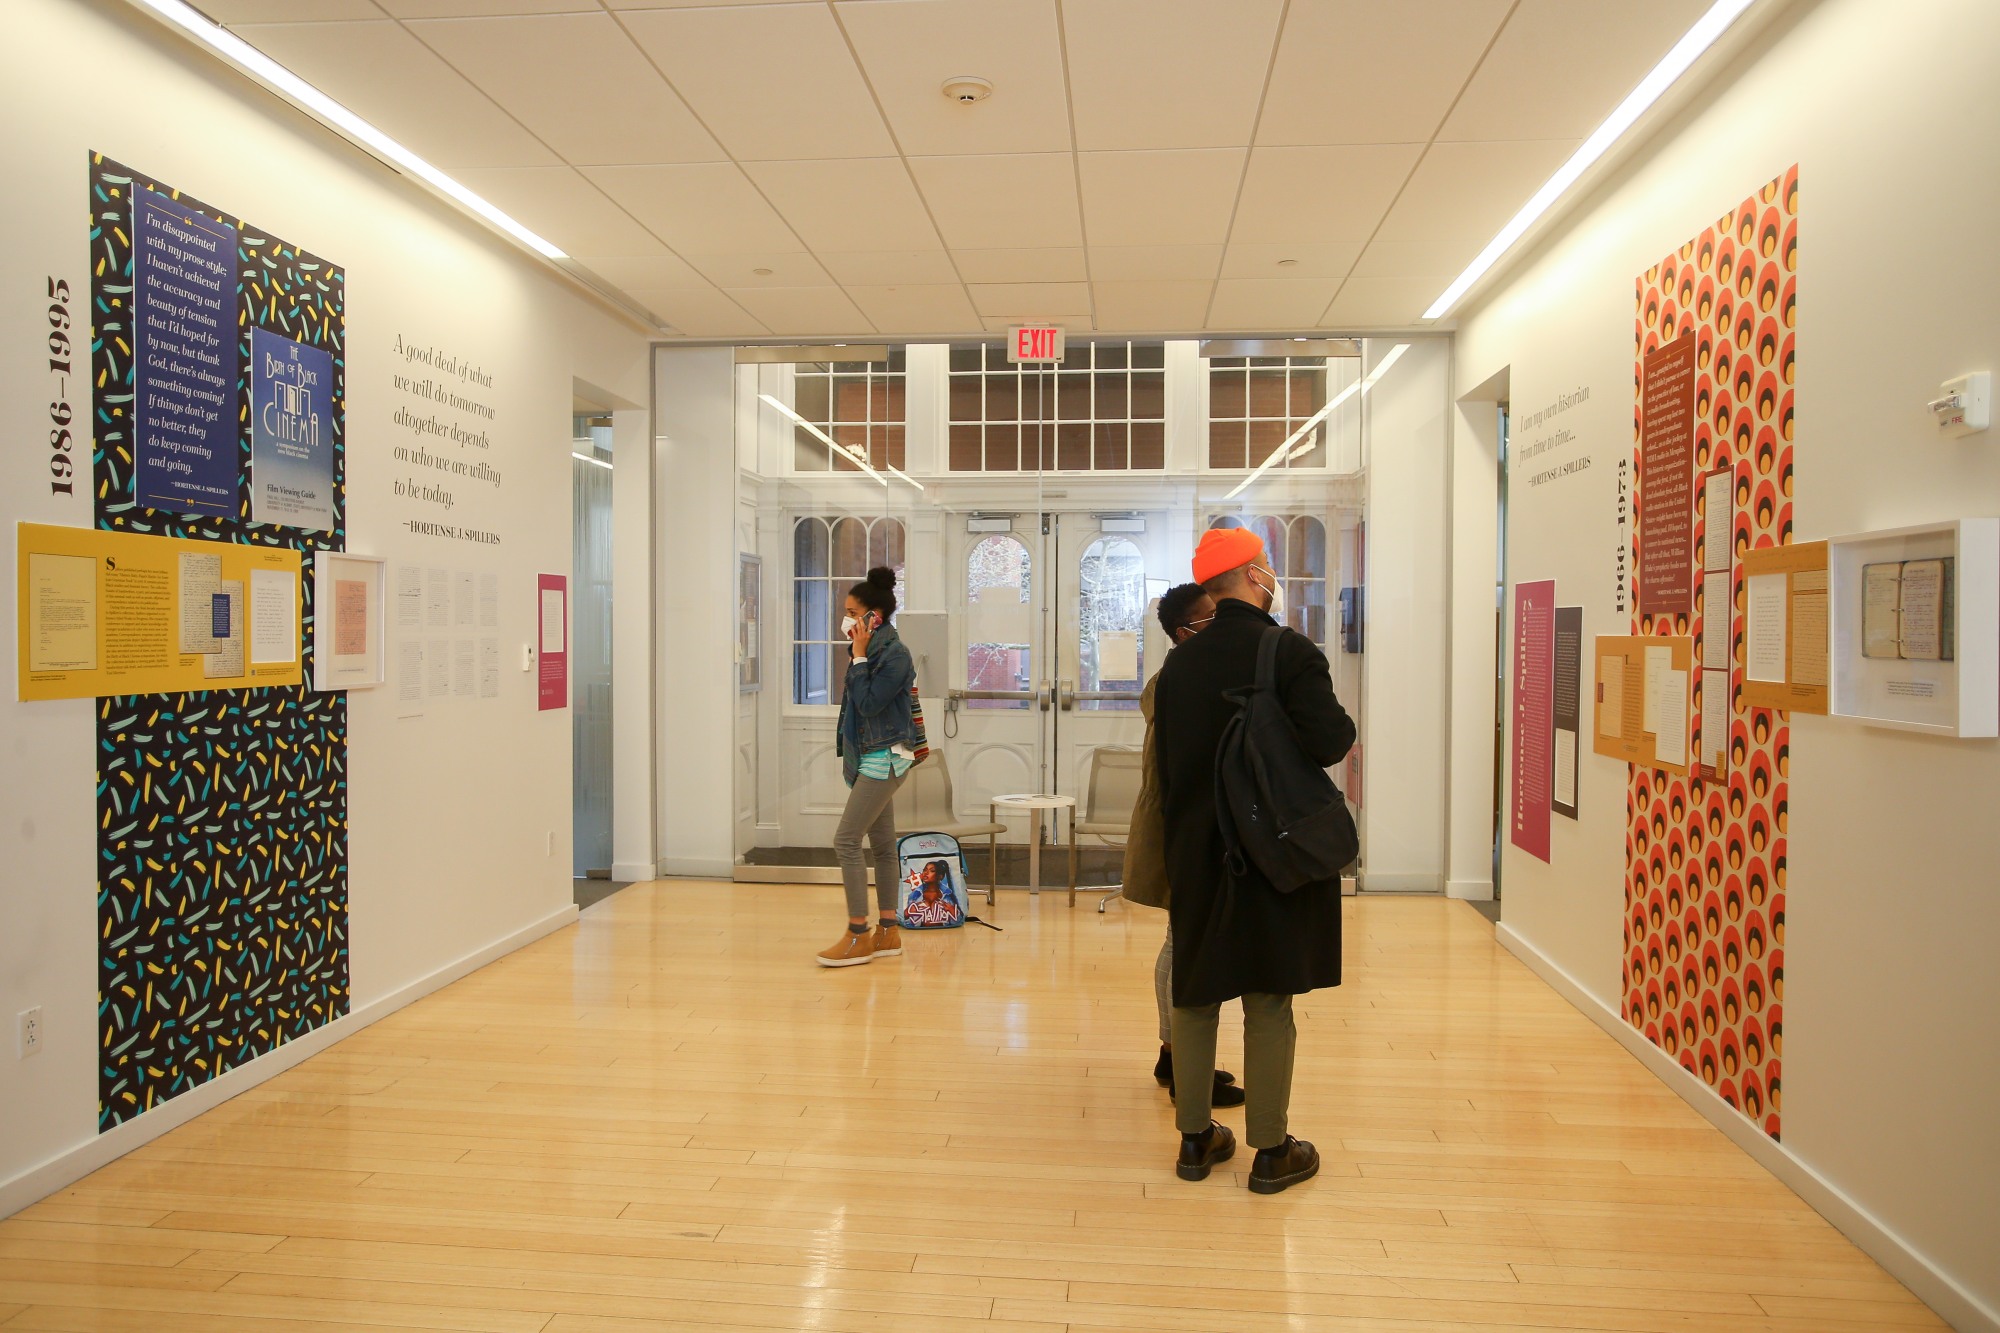 Students visit the exhibit